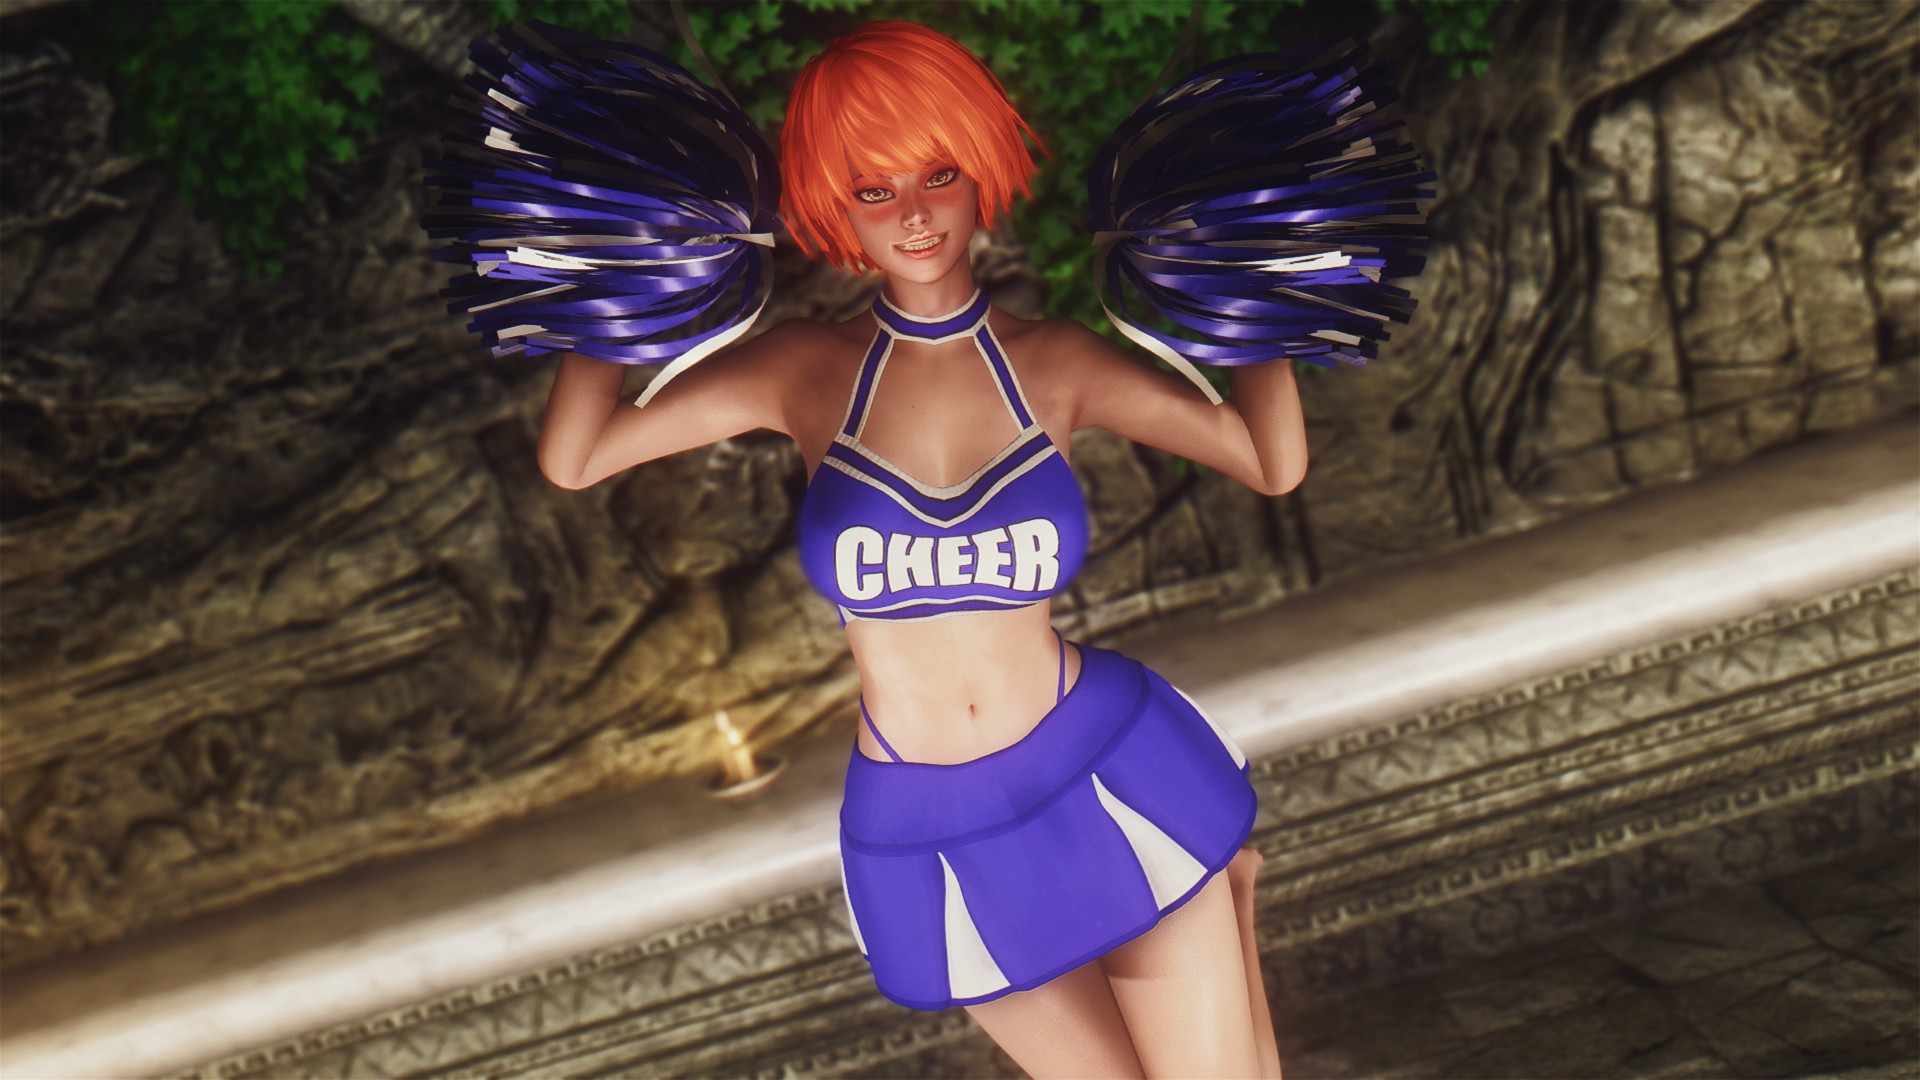 [Melodic] Cheerleader